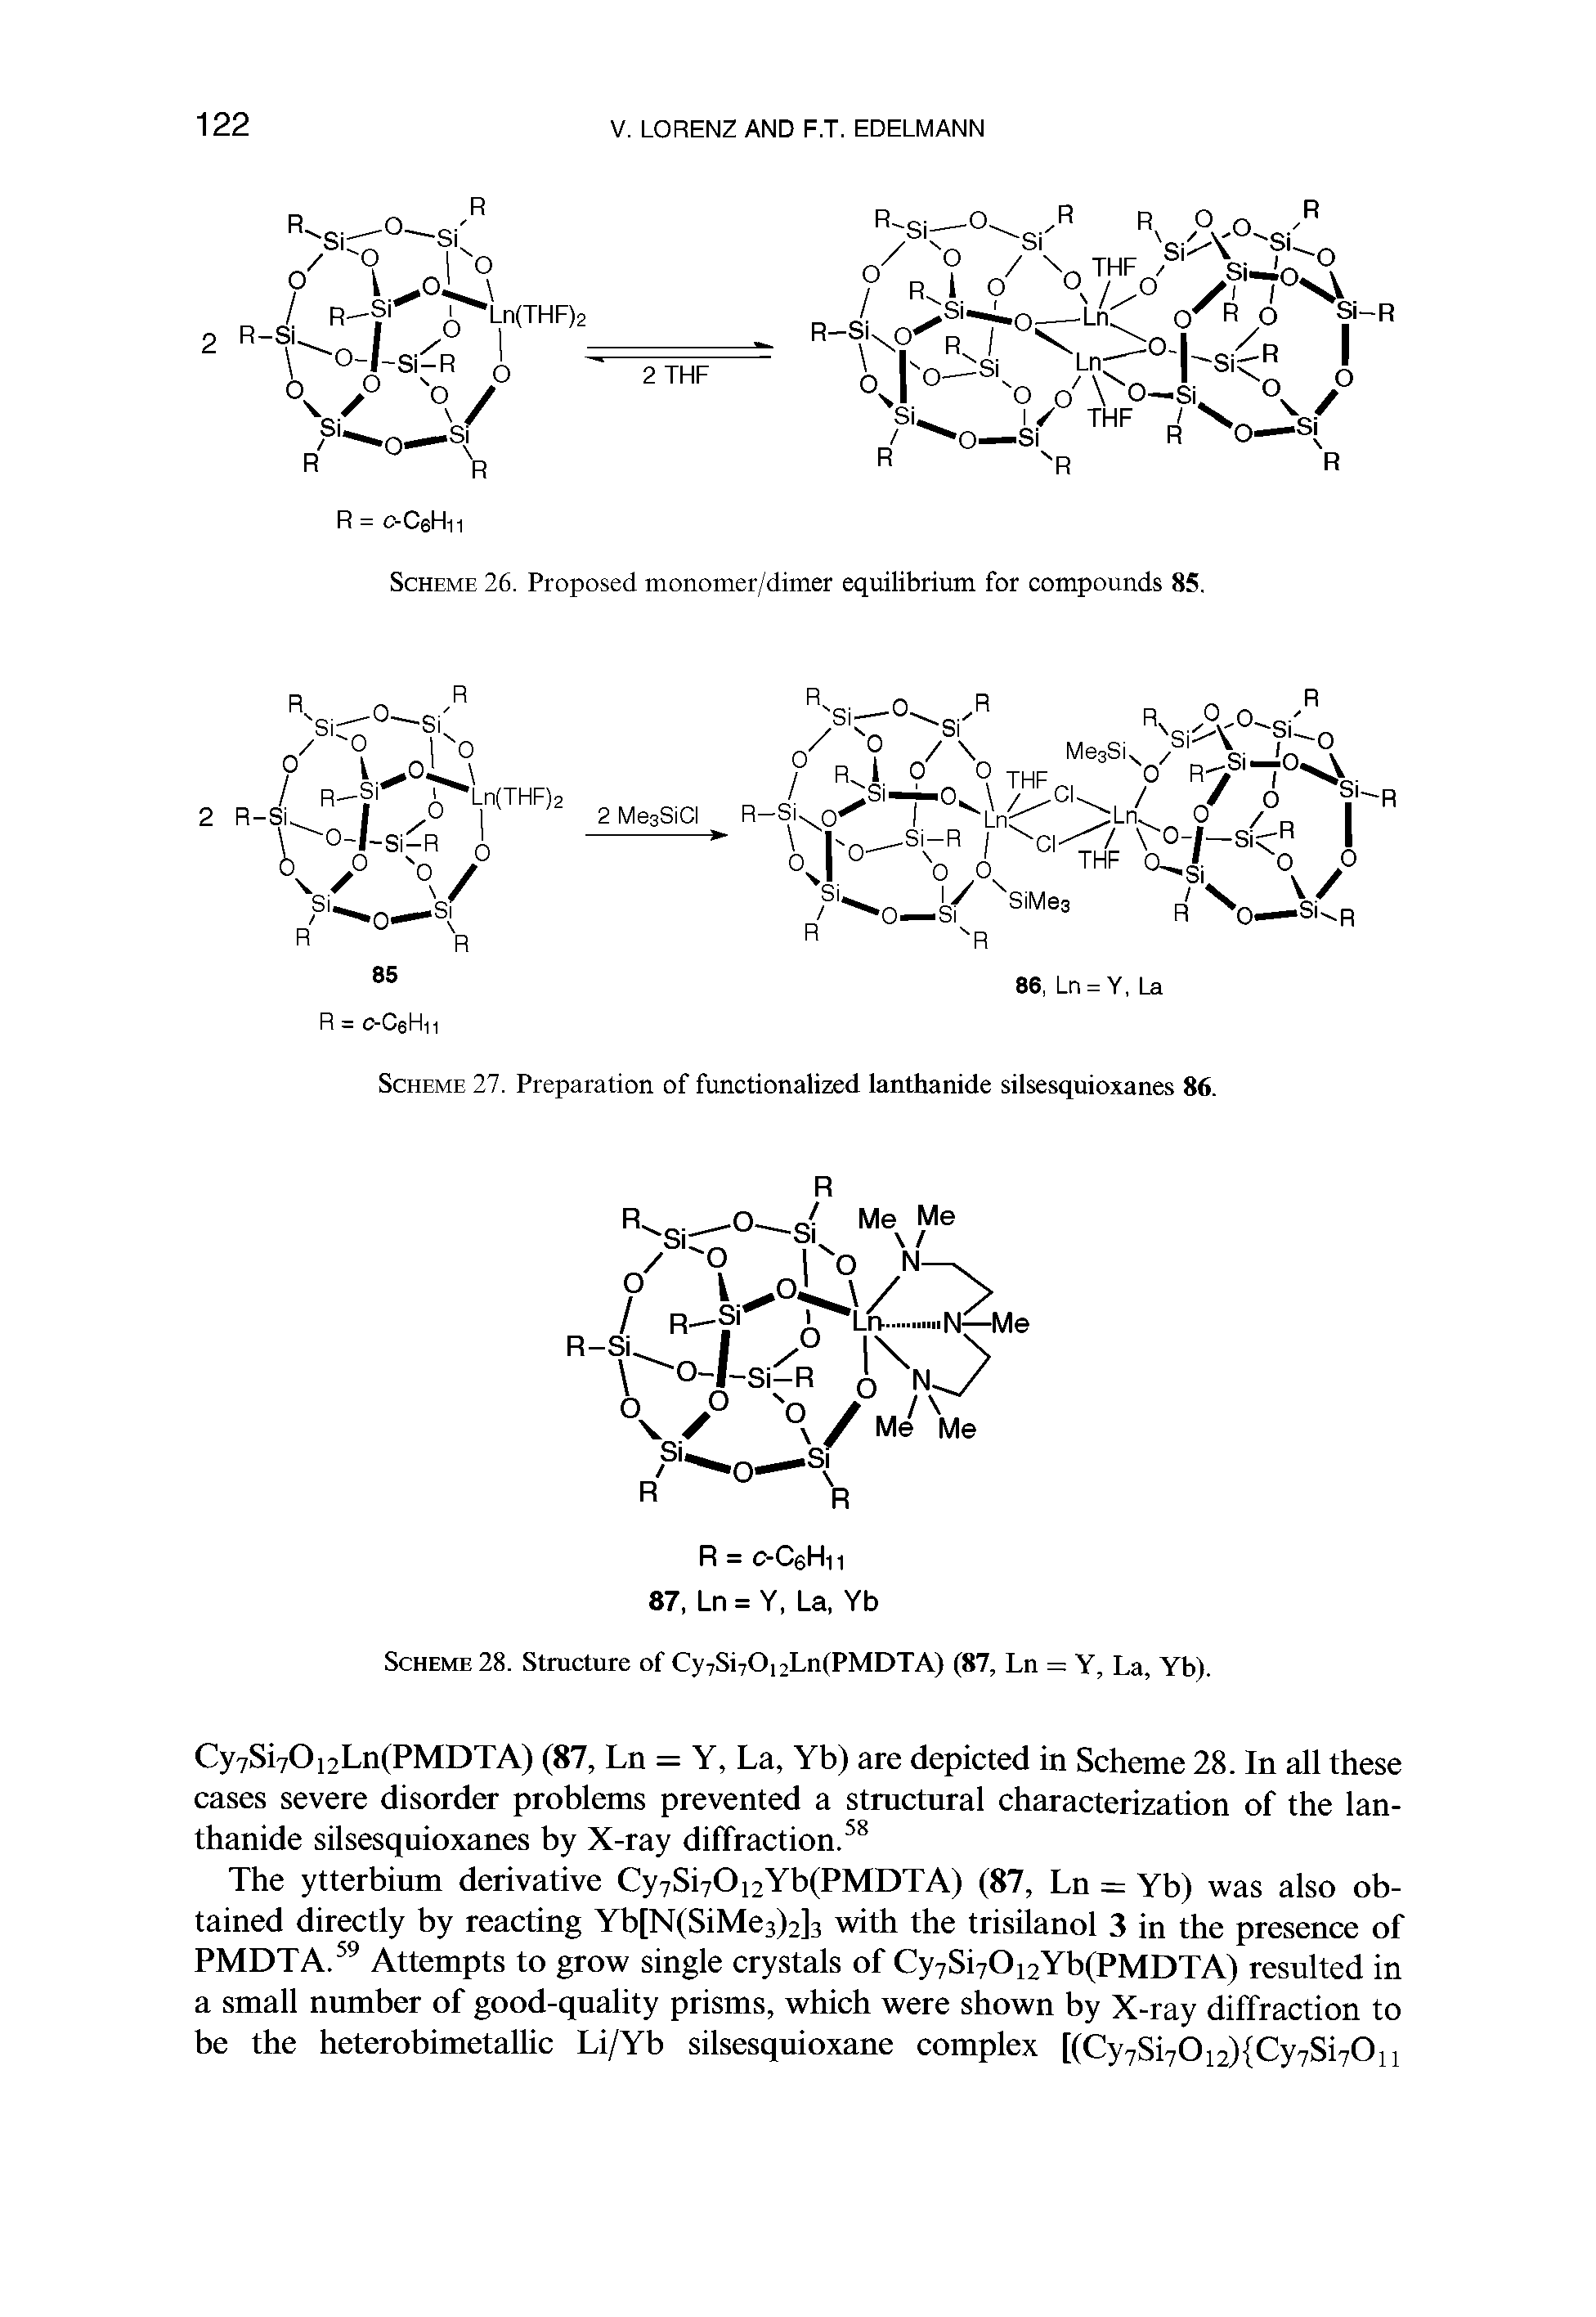 Scheme 26. Proposed monomer/dimer equilibrium for compounds 85.